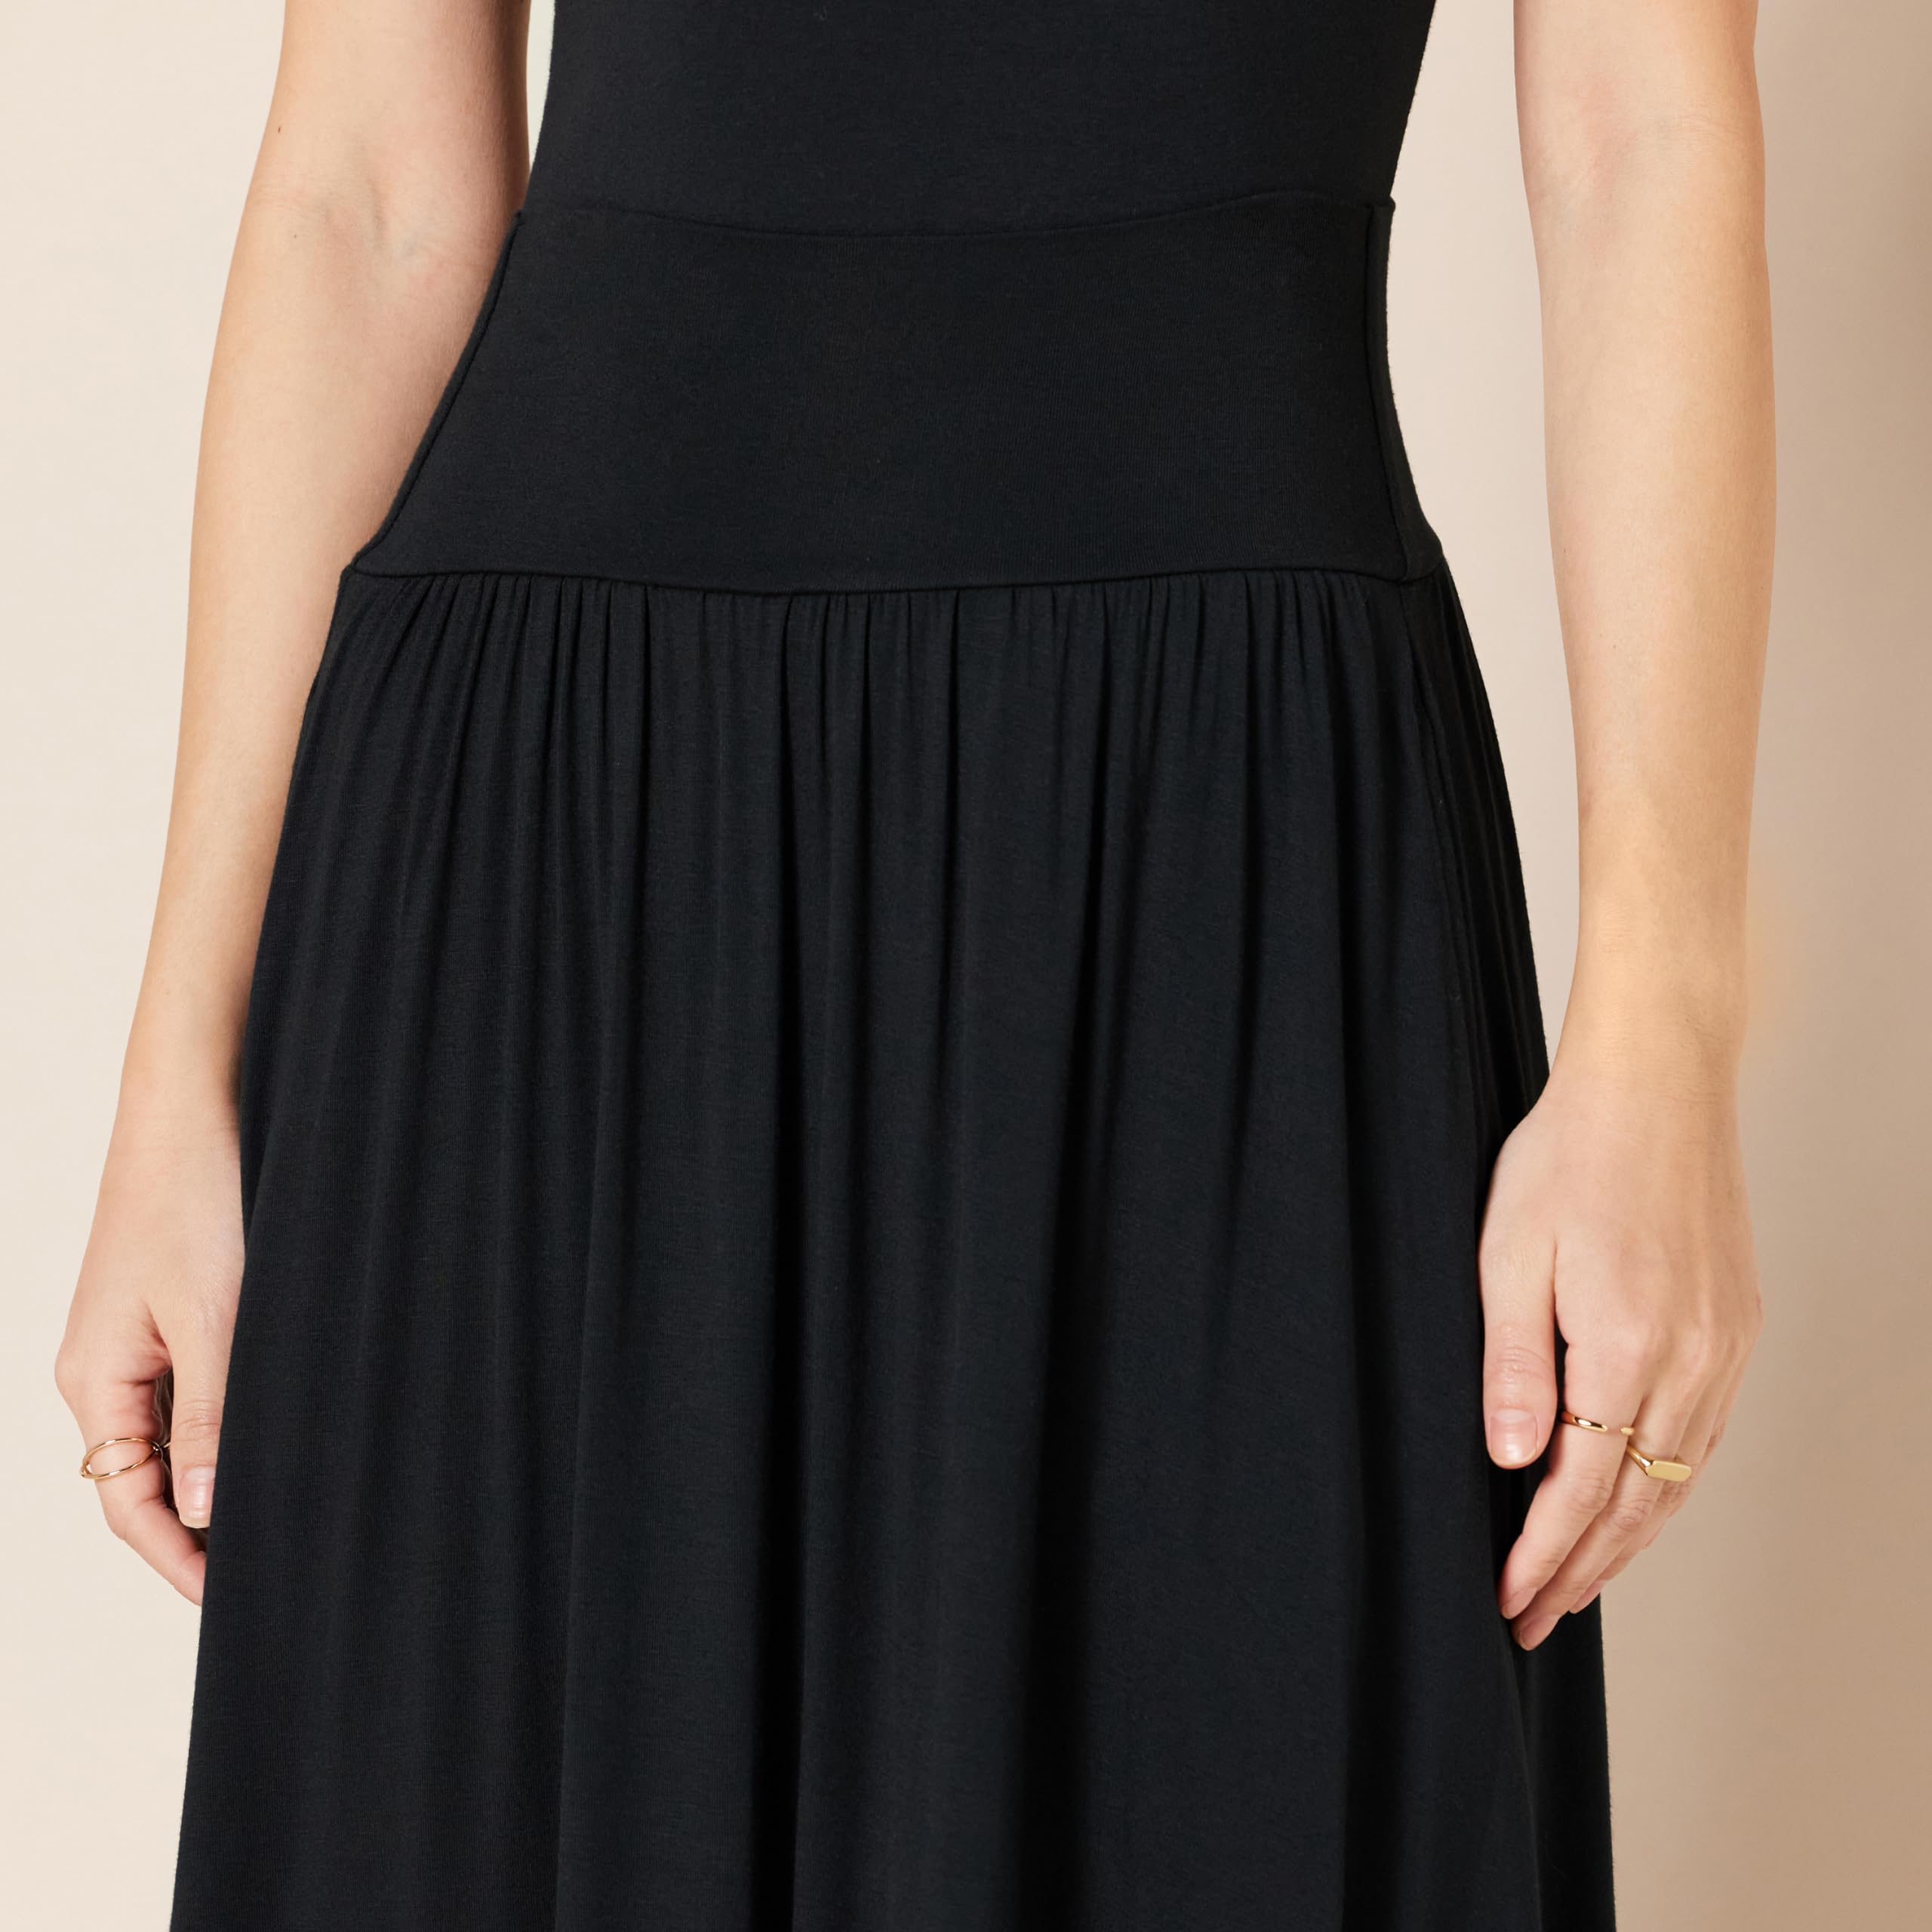 Amazon Essentials Women's Jersey Pull On Midi Length Skirt